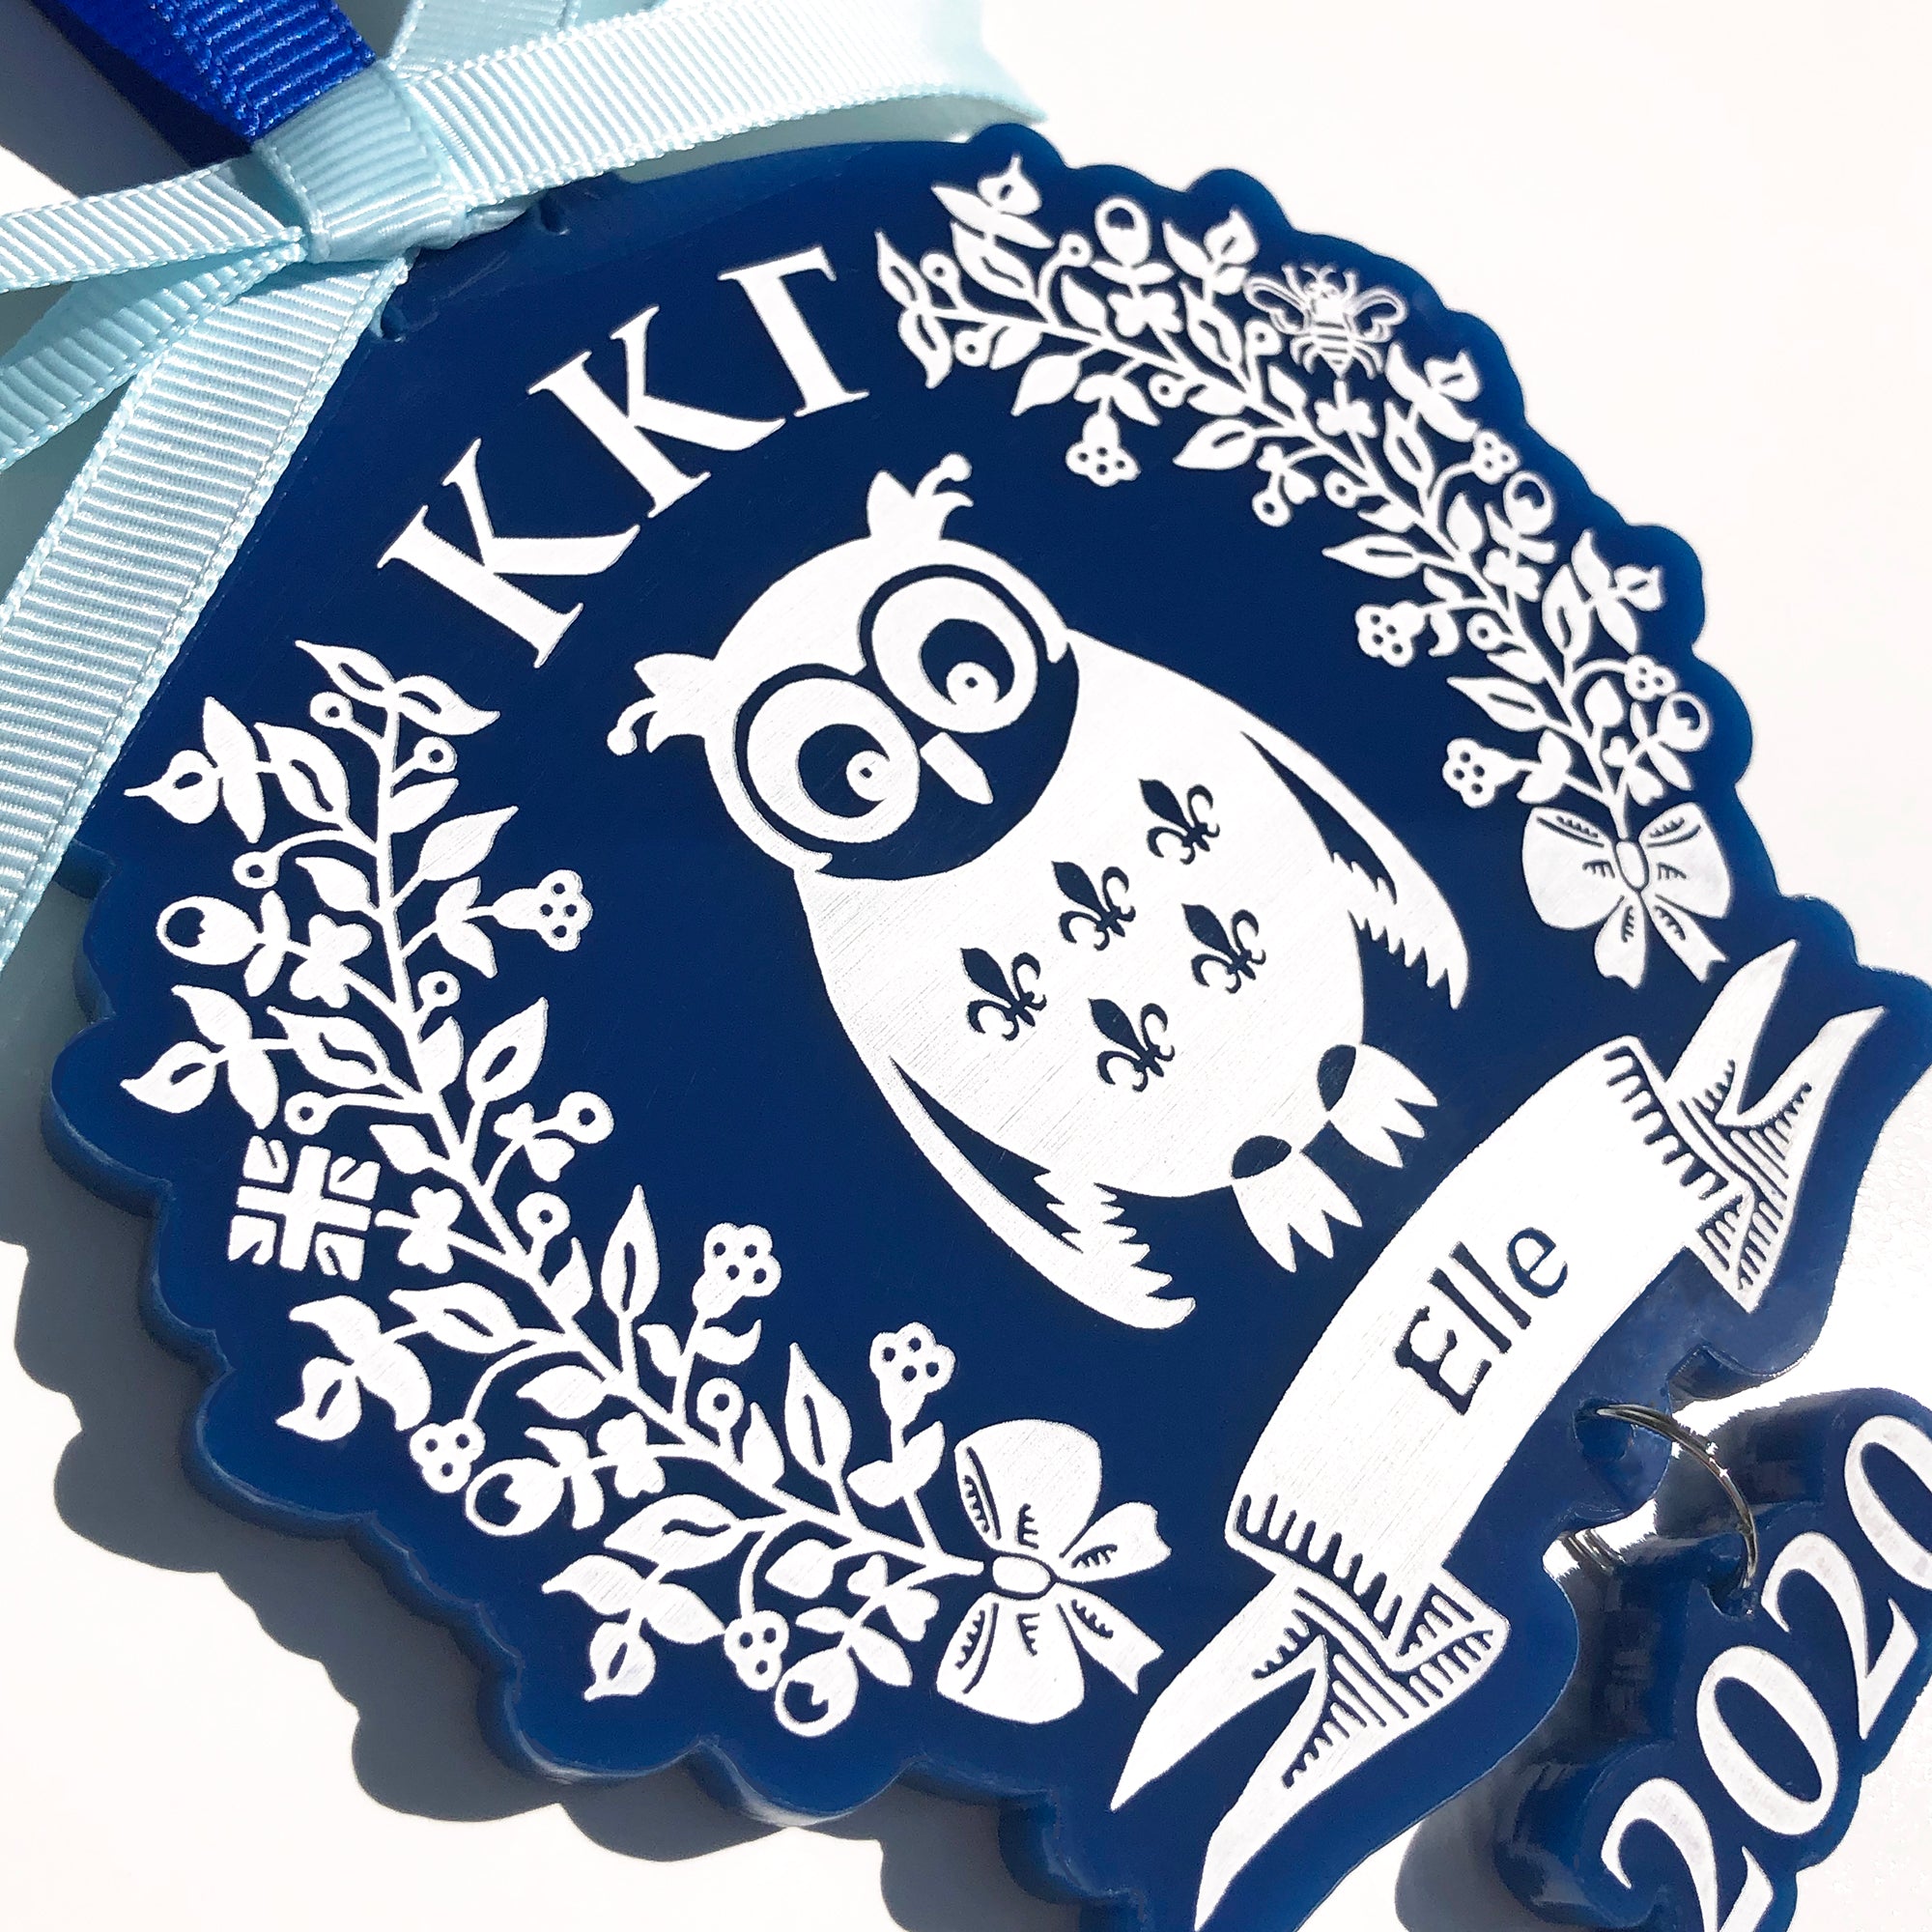 Kappa Kappa Gamma Ornament | Brit and Bee